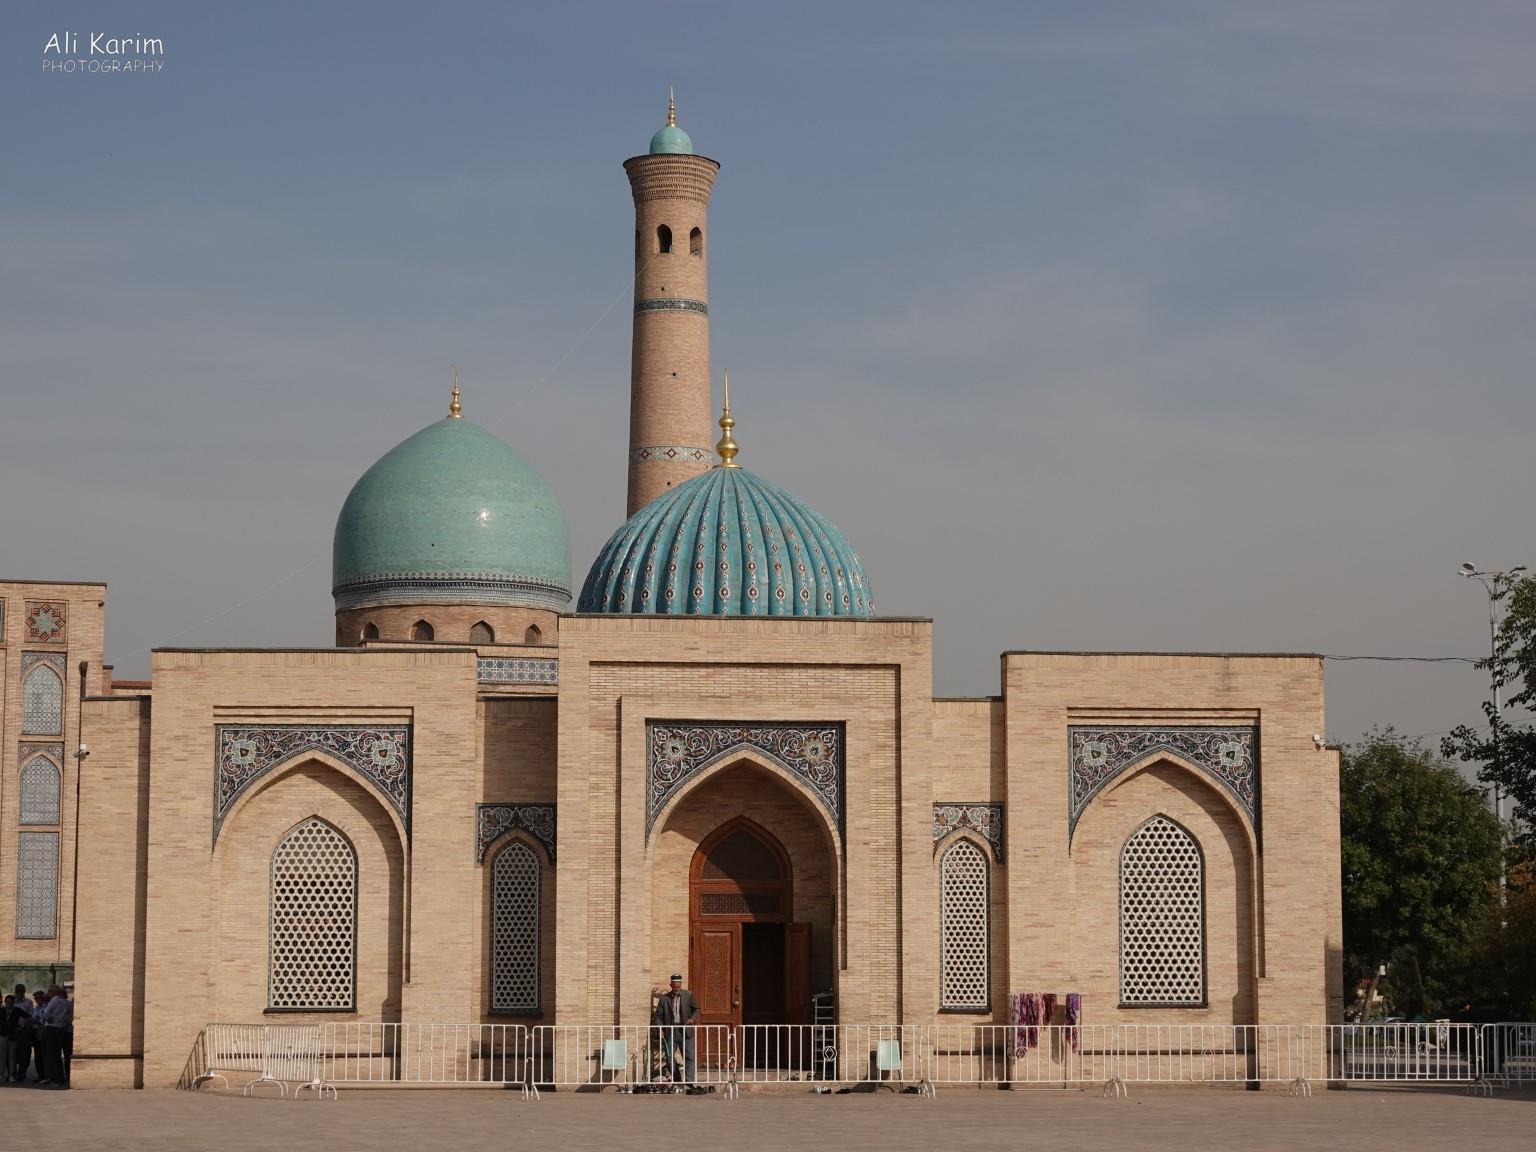 Tashkent, Oct 2019, The building that housed the oldest Koran of Osman